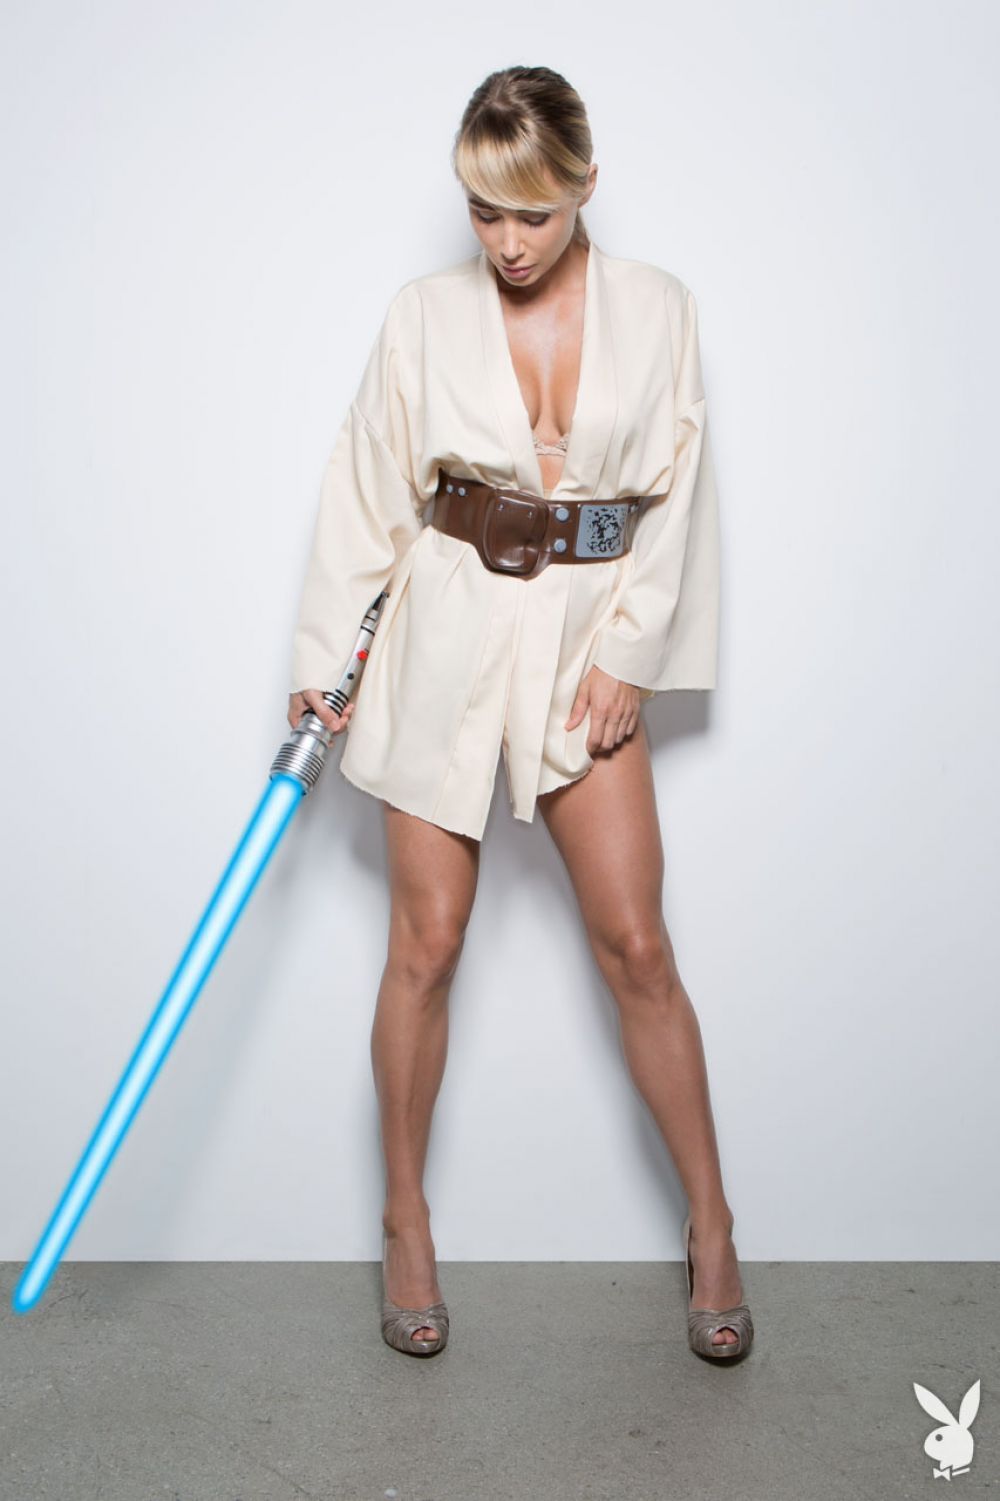 Sexyreferences Reference Luke Skywalker